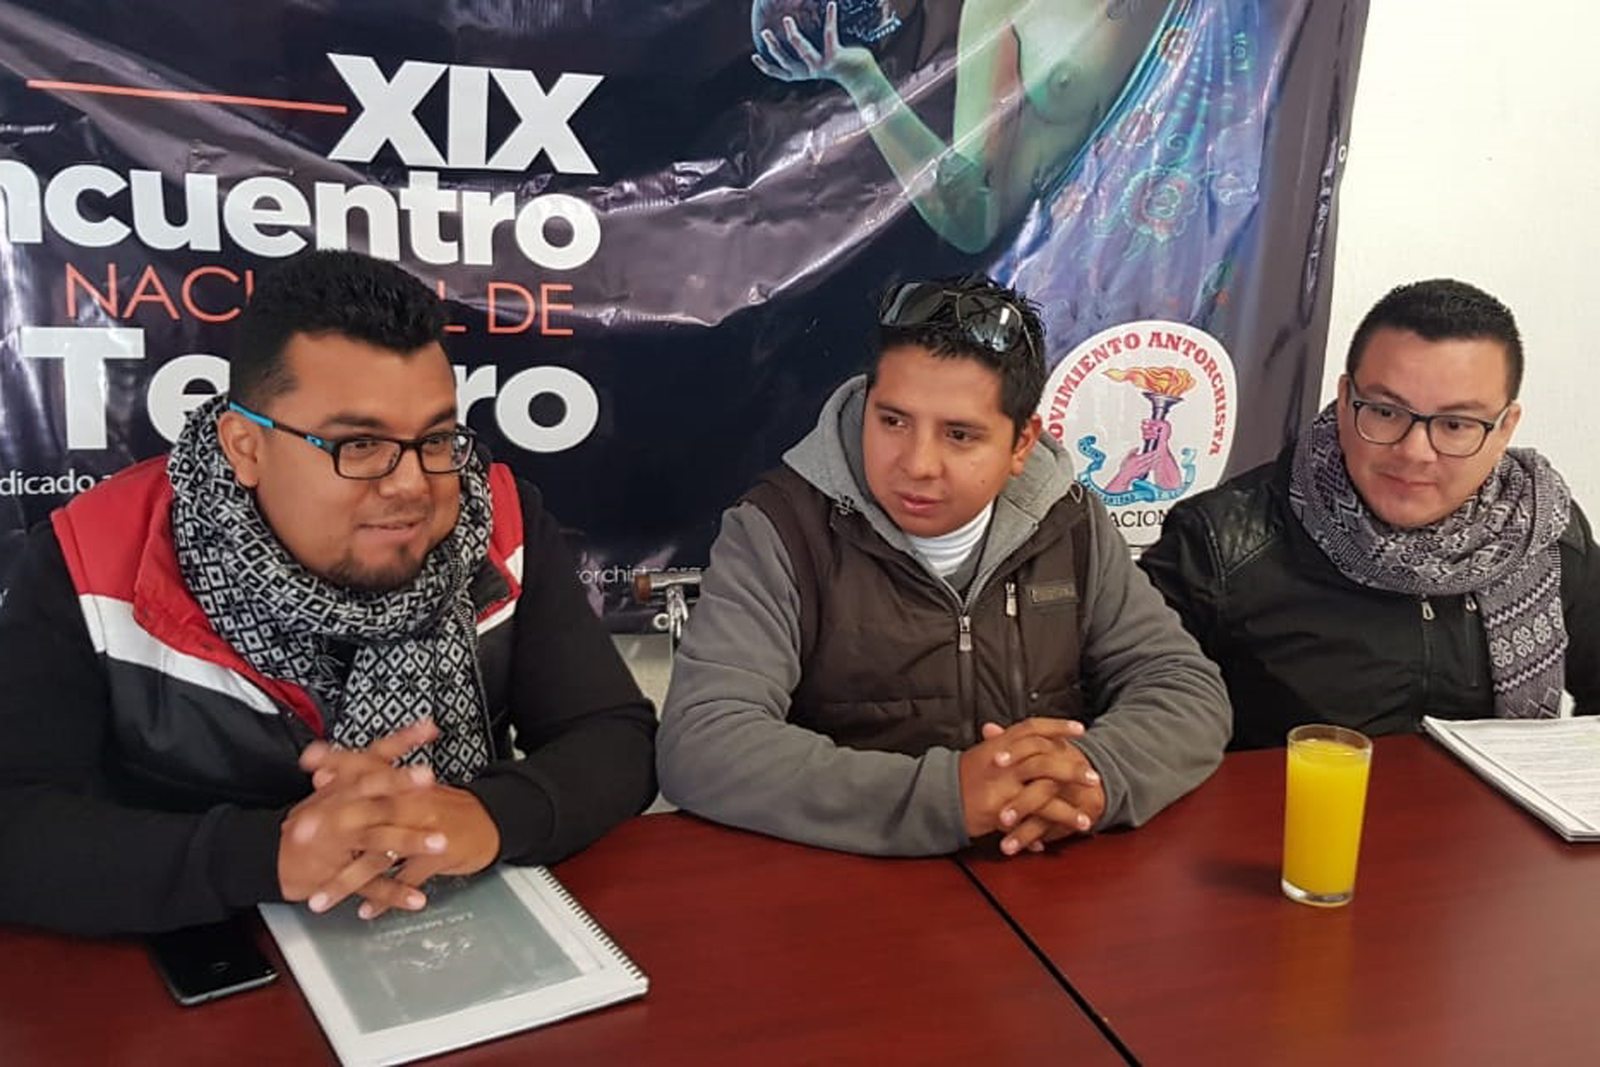 Evento cultural. Coahuilenses buscan destacar en el XIX Encuentro Nacional de Teatro en San Luis Potosí. (ROBERTO ITURRIAGA)